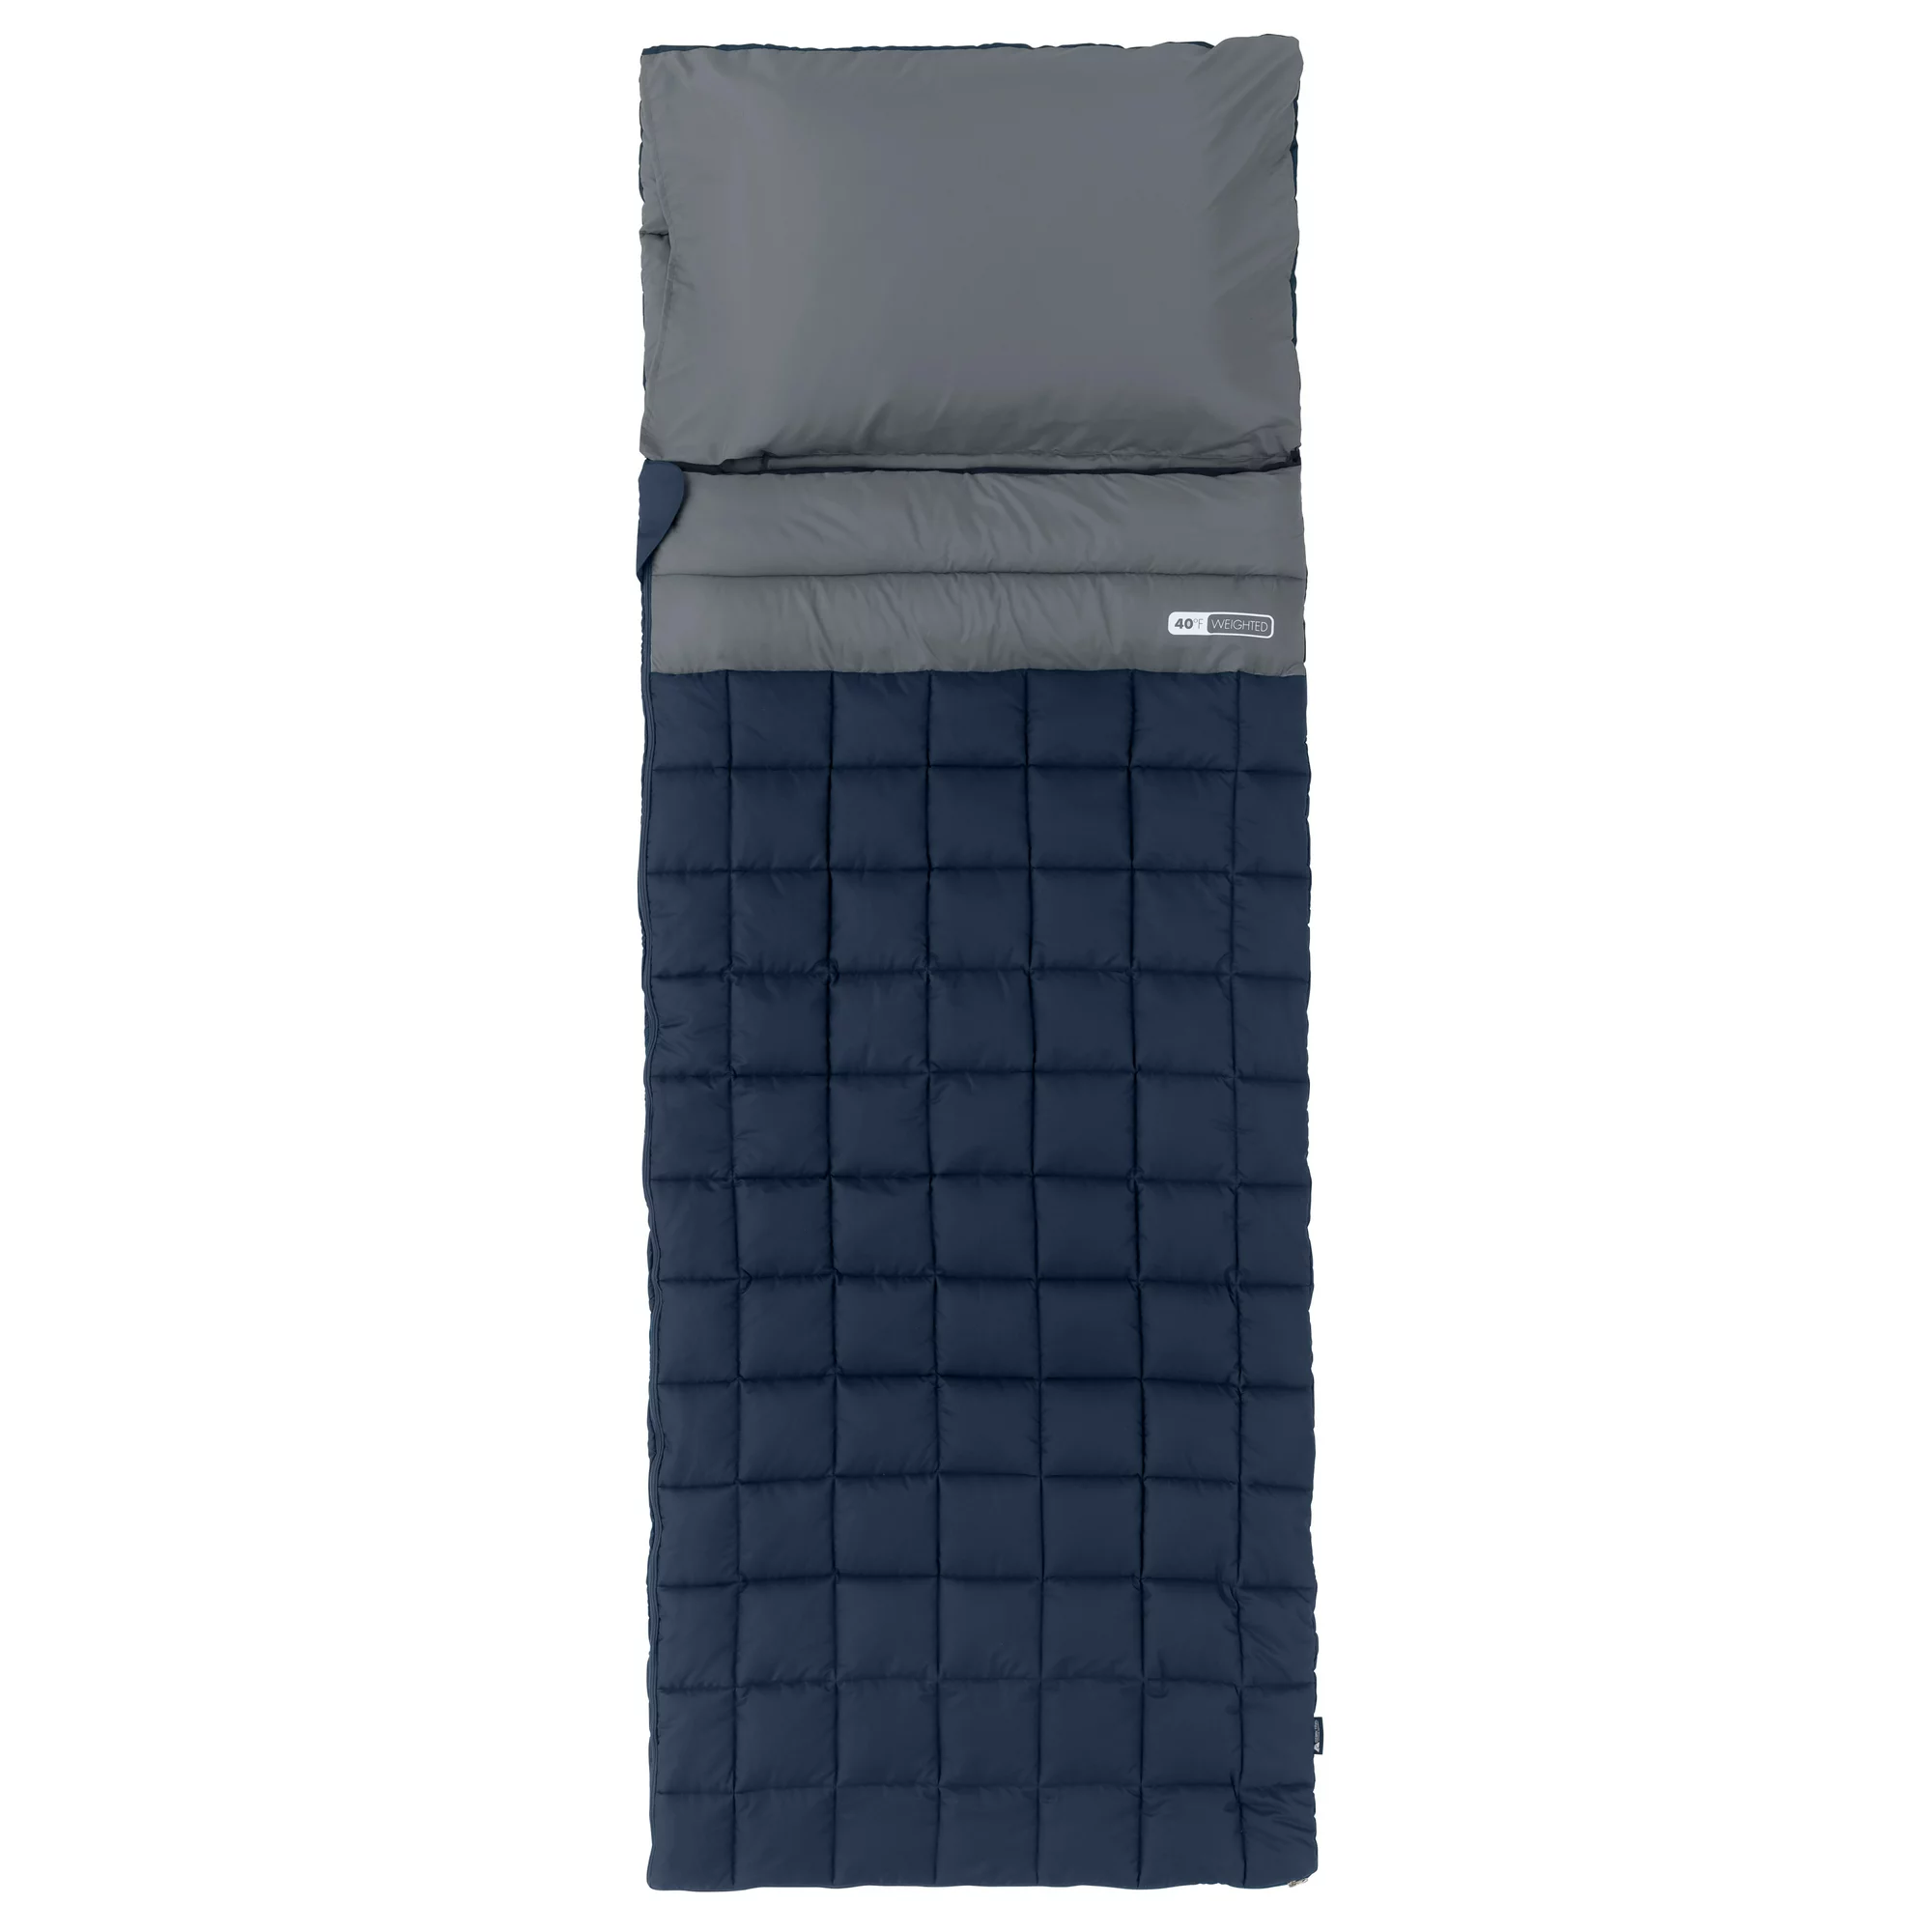 Walmart: Ozark Trail 40F Weighted Sleeping Bag $25 (Reg $59)